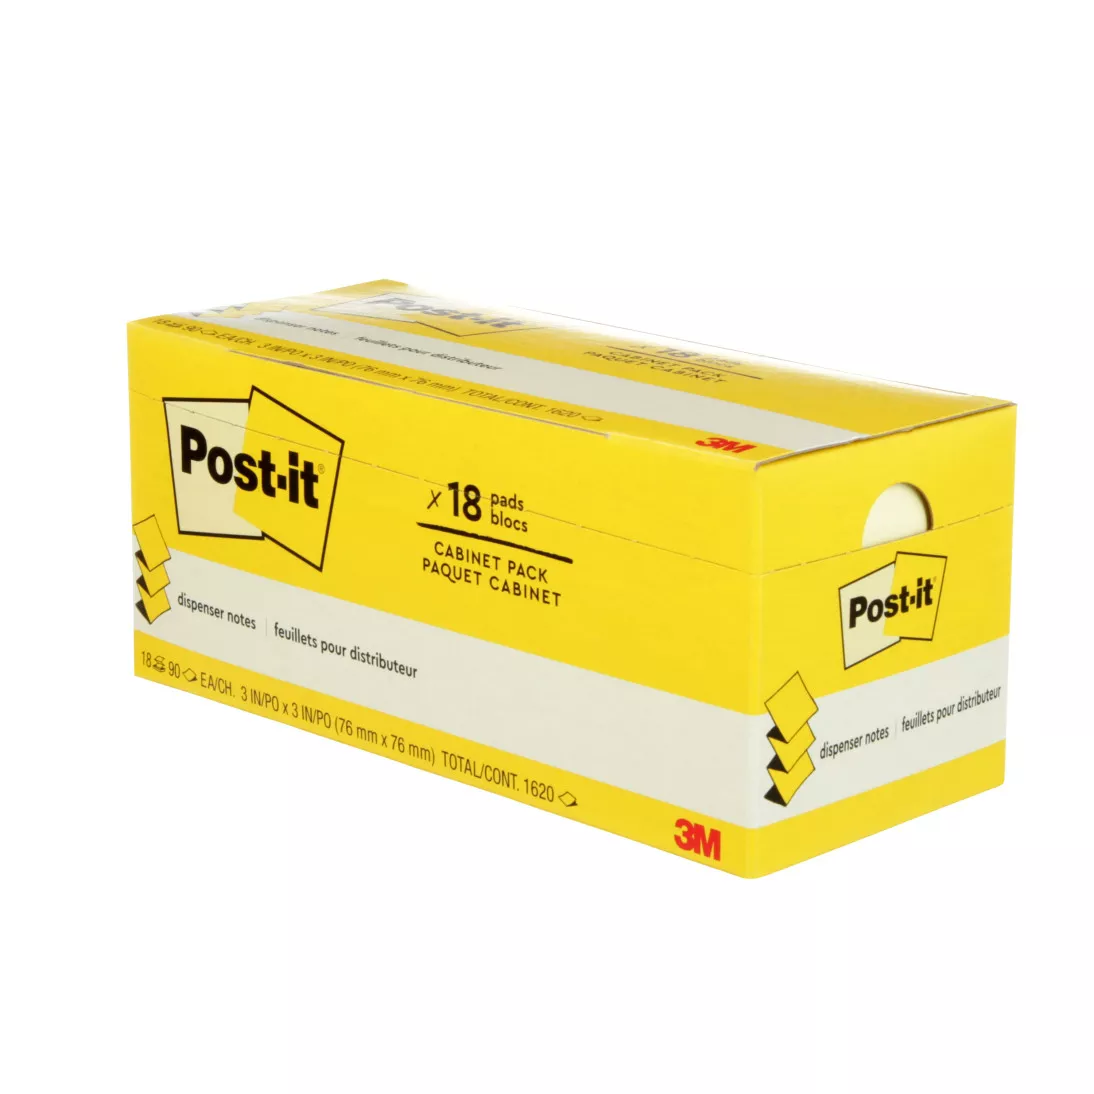 Post-it® Pop-up Notes R330-18CP, 3 in x 3 in (76 mm x 76 mm), Canary Yellow, 100 sheets/pad, 18 Pad Cabinet Pack